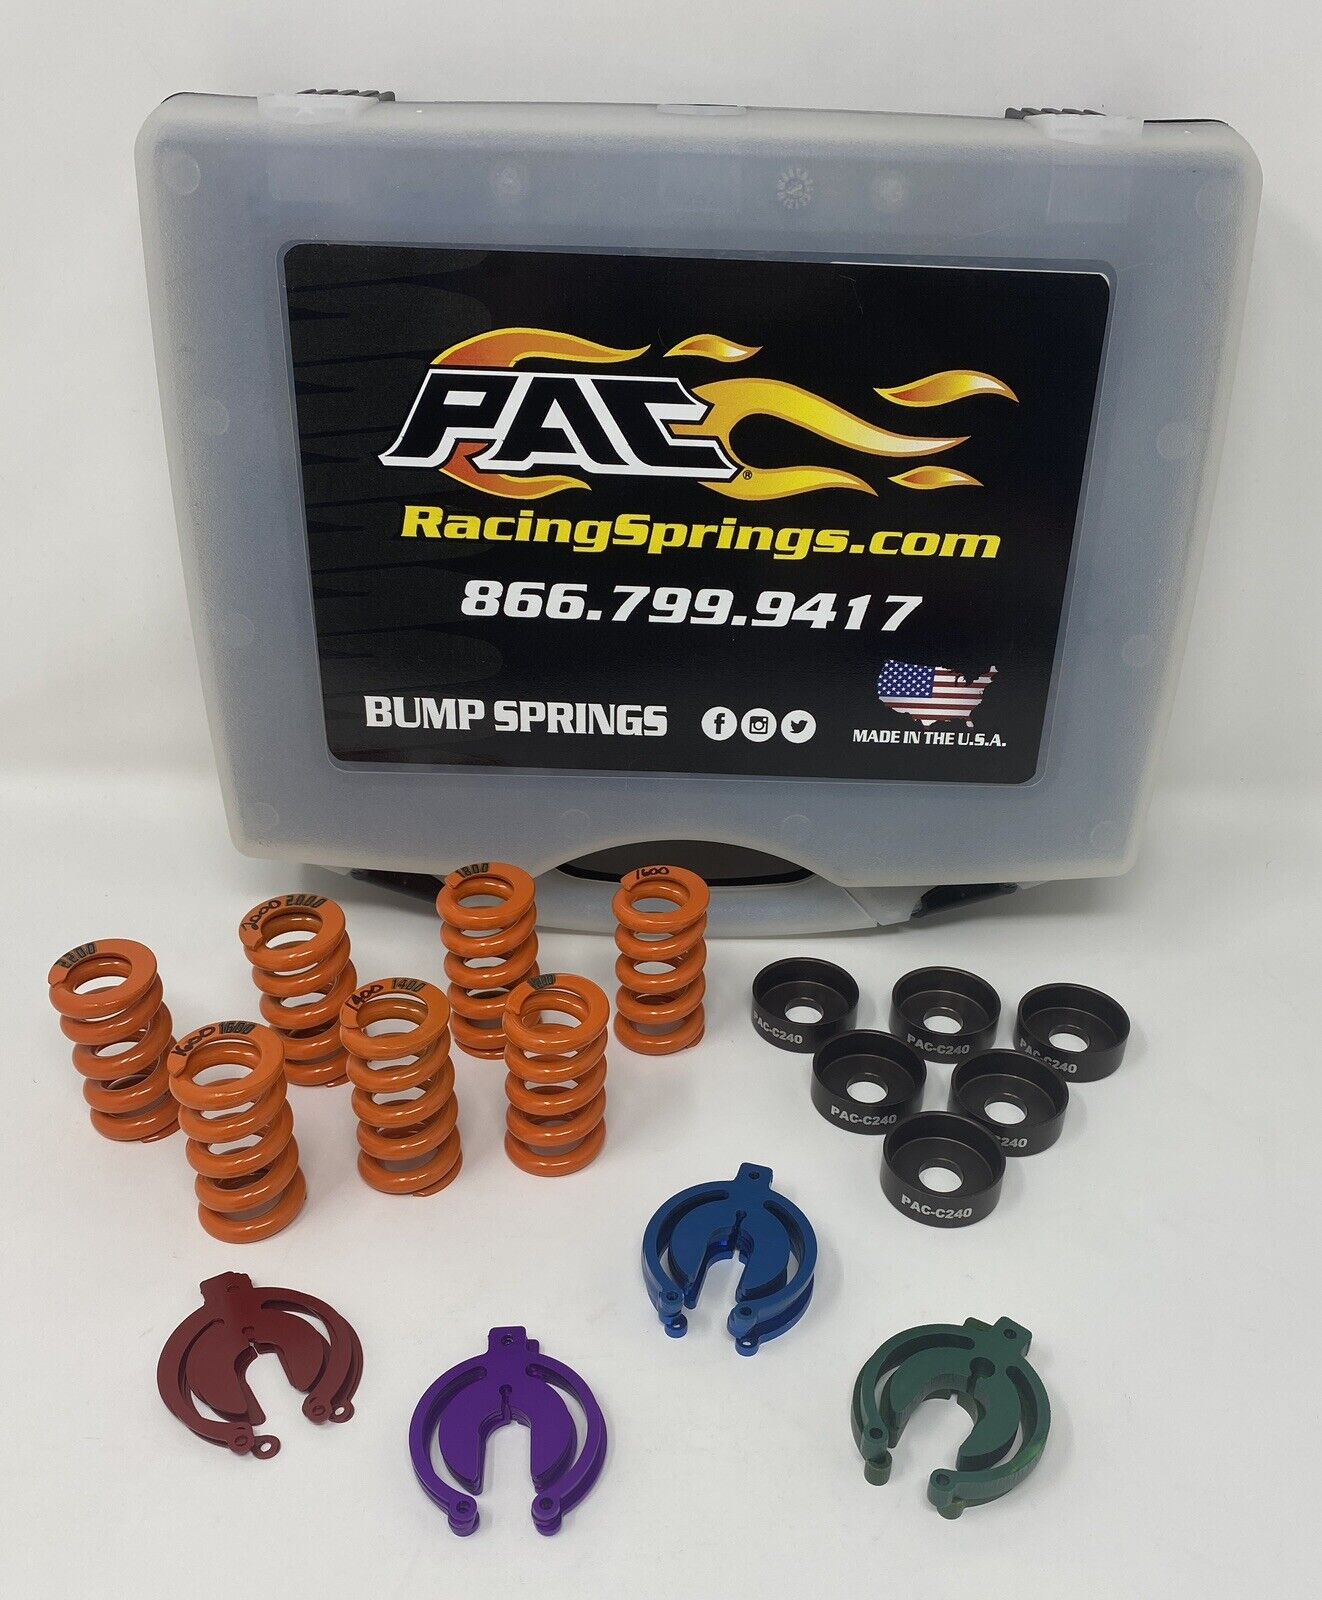 PAC Racing Springs Bump Spring Kit- Late Model- Modified Motorsports